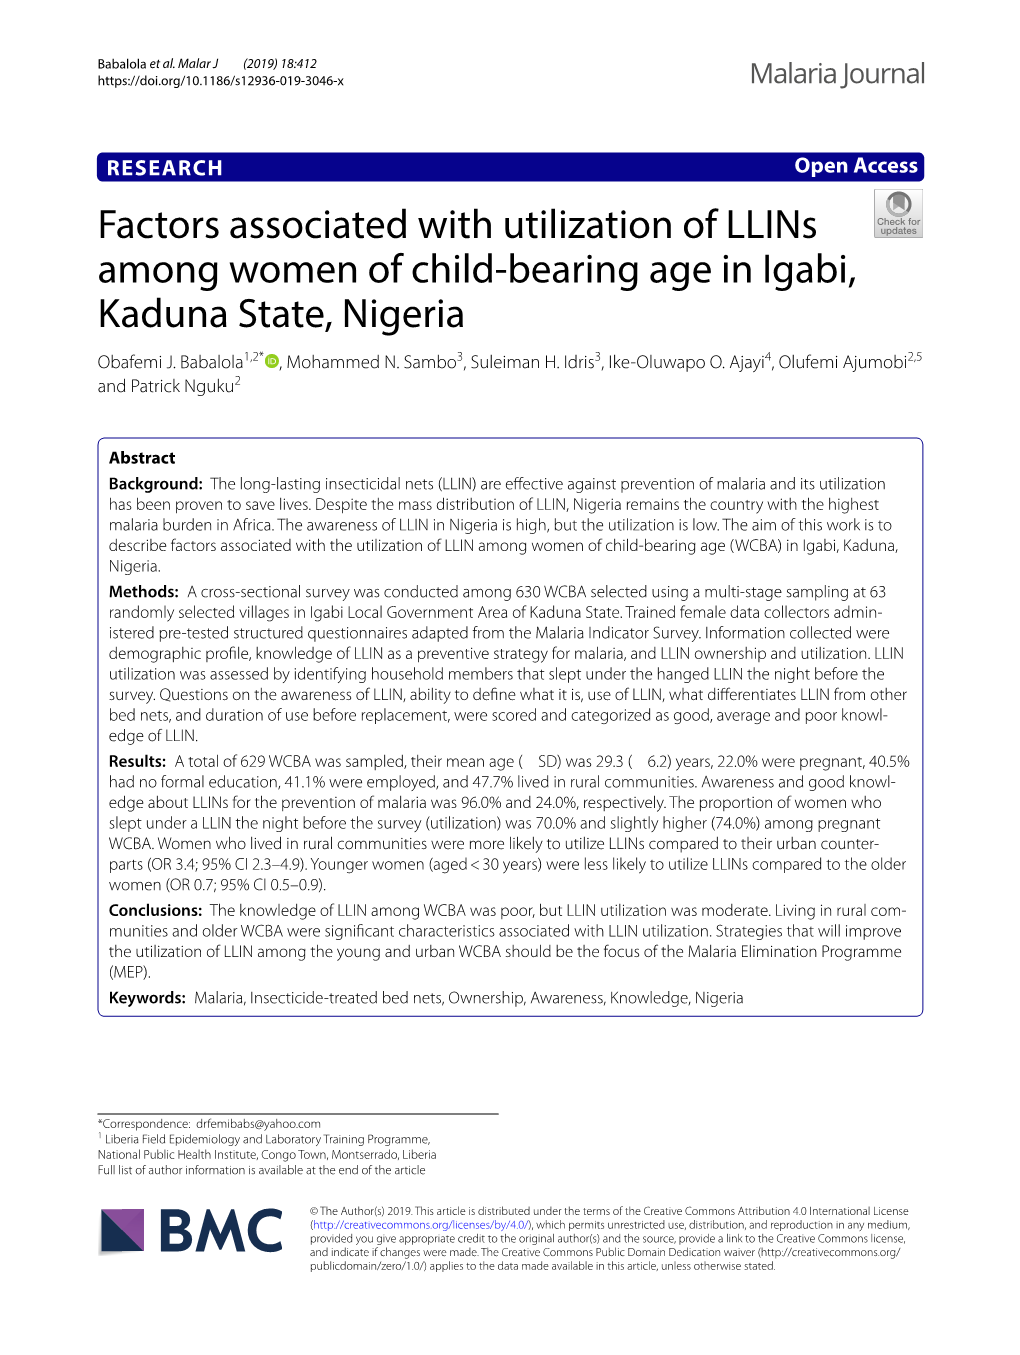 Factors Associated with Utilization of Llins Among Women of Child‑Bearing Age in Igabi, Kaduna State, Nigeria Obafemi J